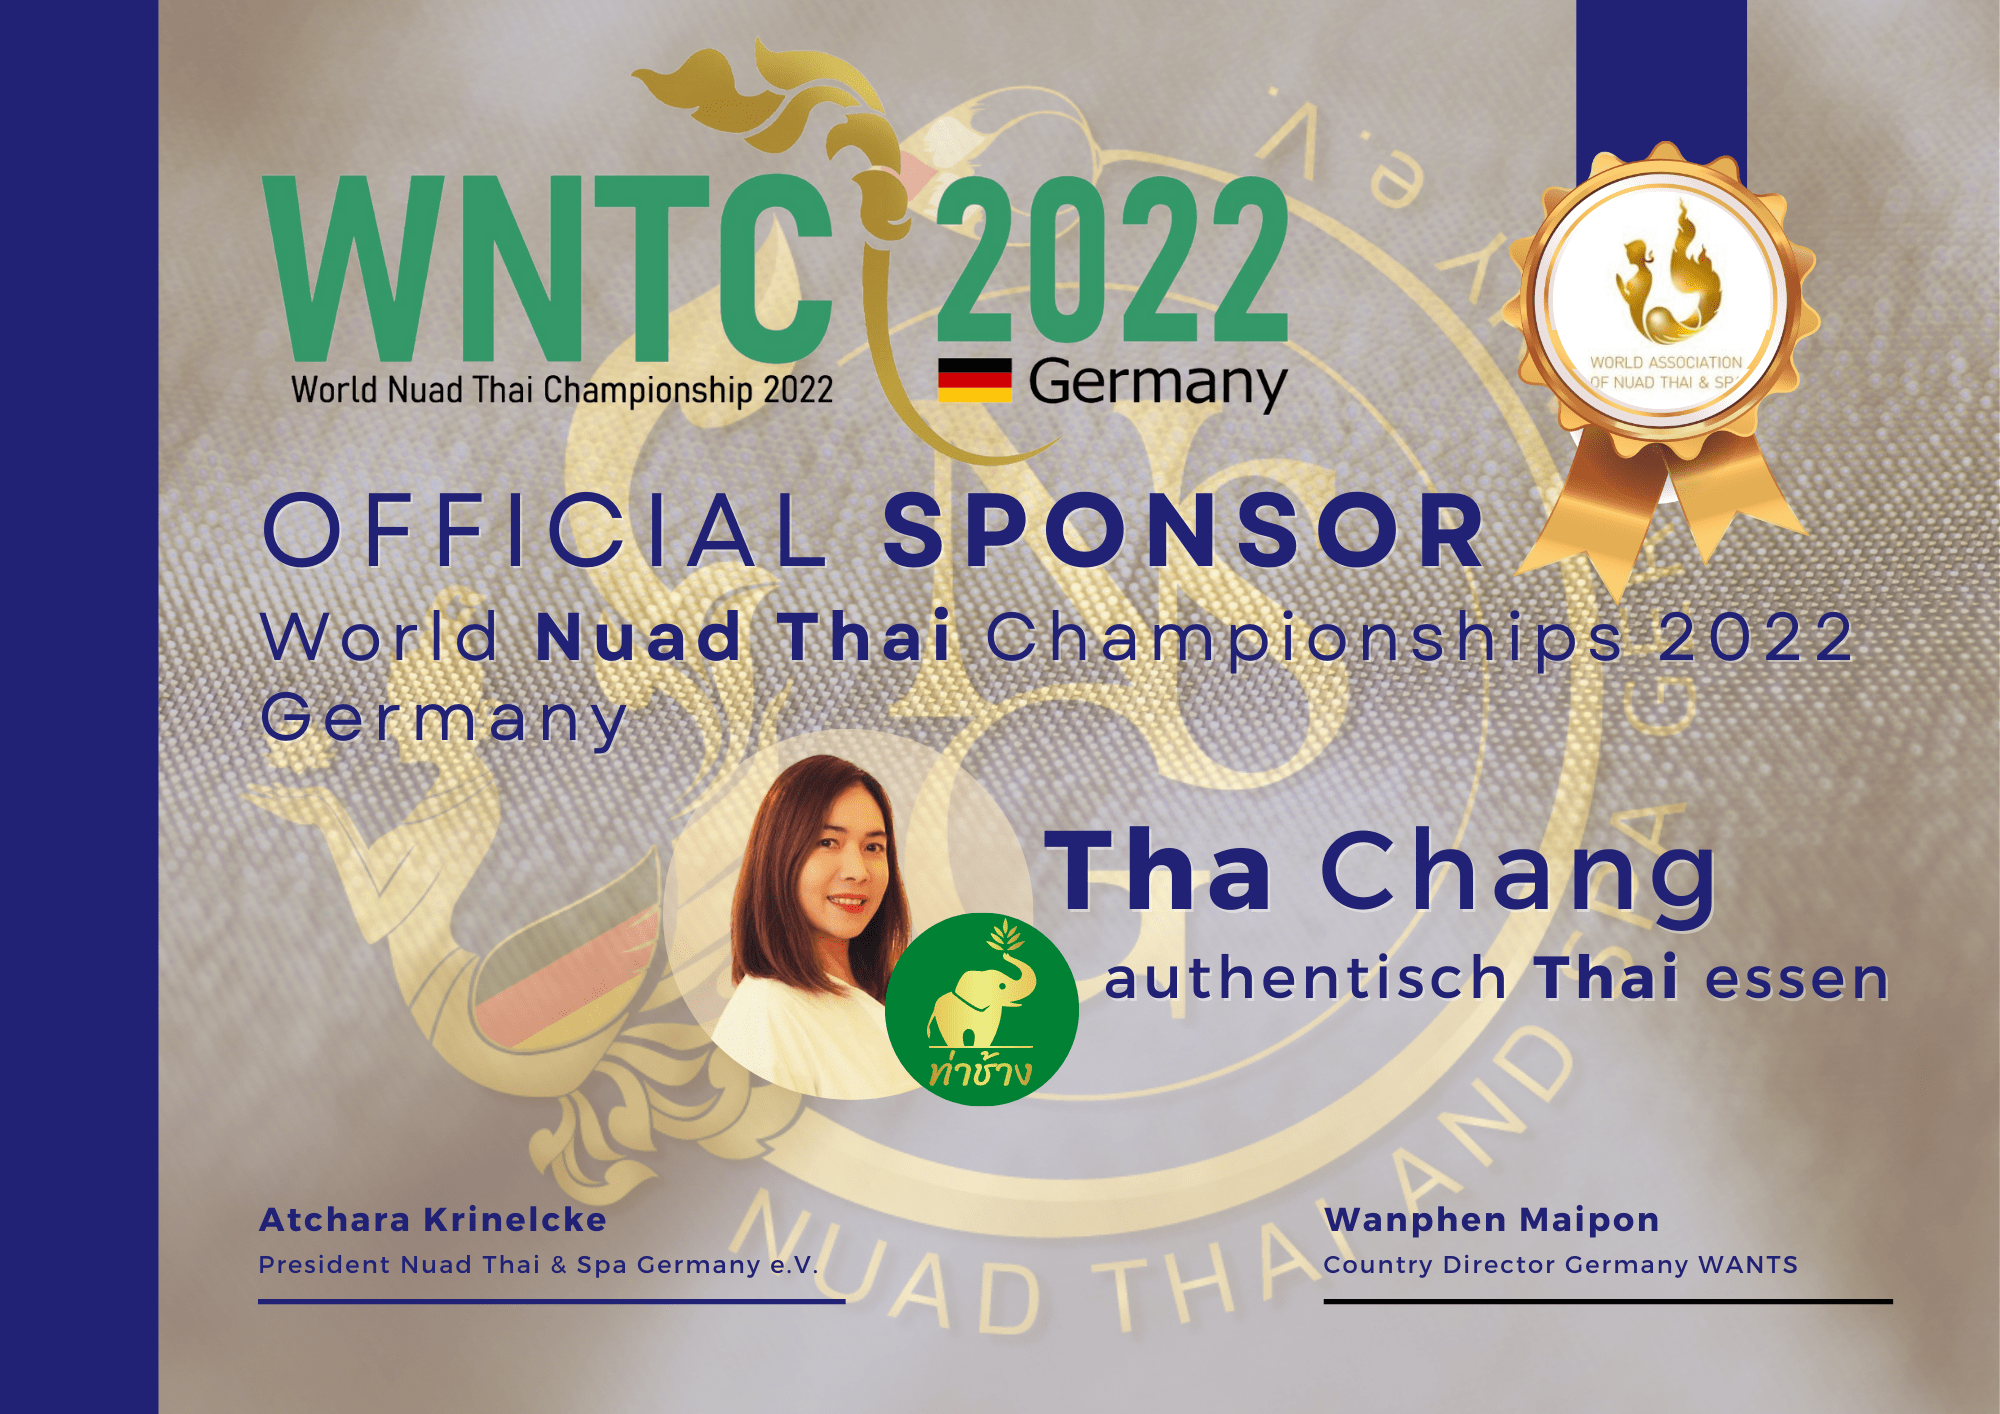 germany official sponsor wntc2022 3 Tha Chang Stuttgart Authentic Thai Food